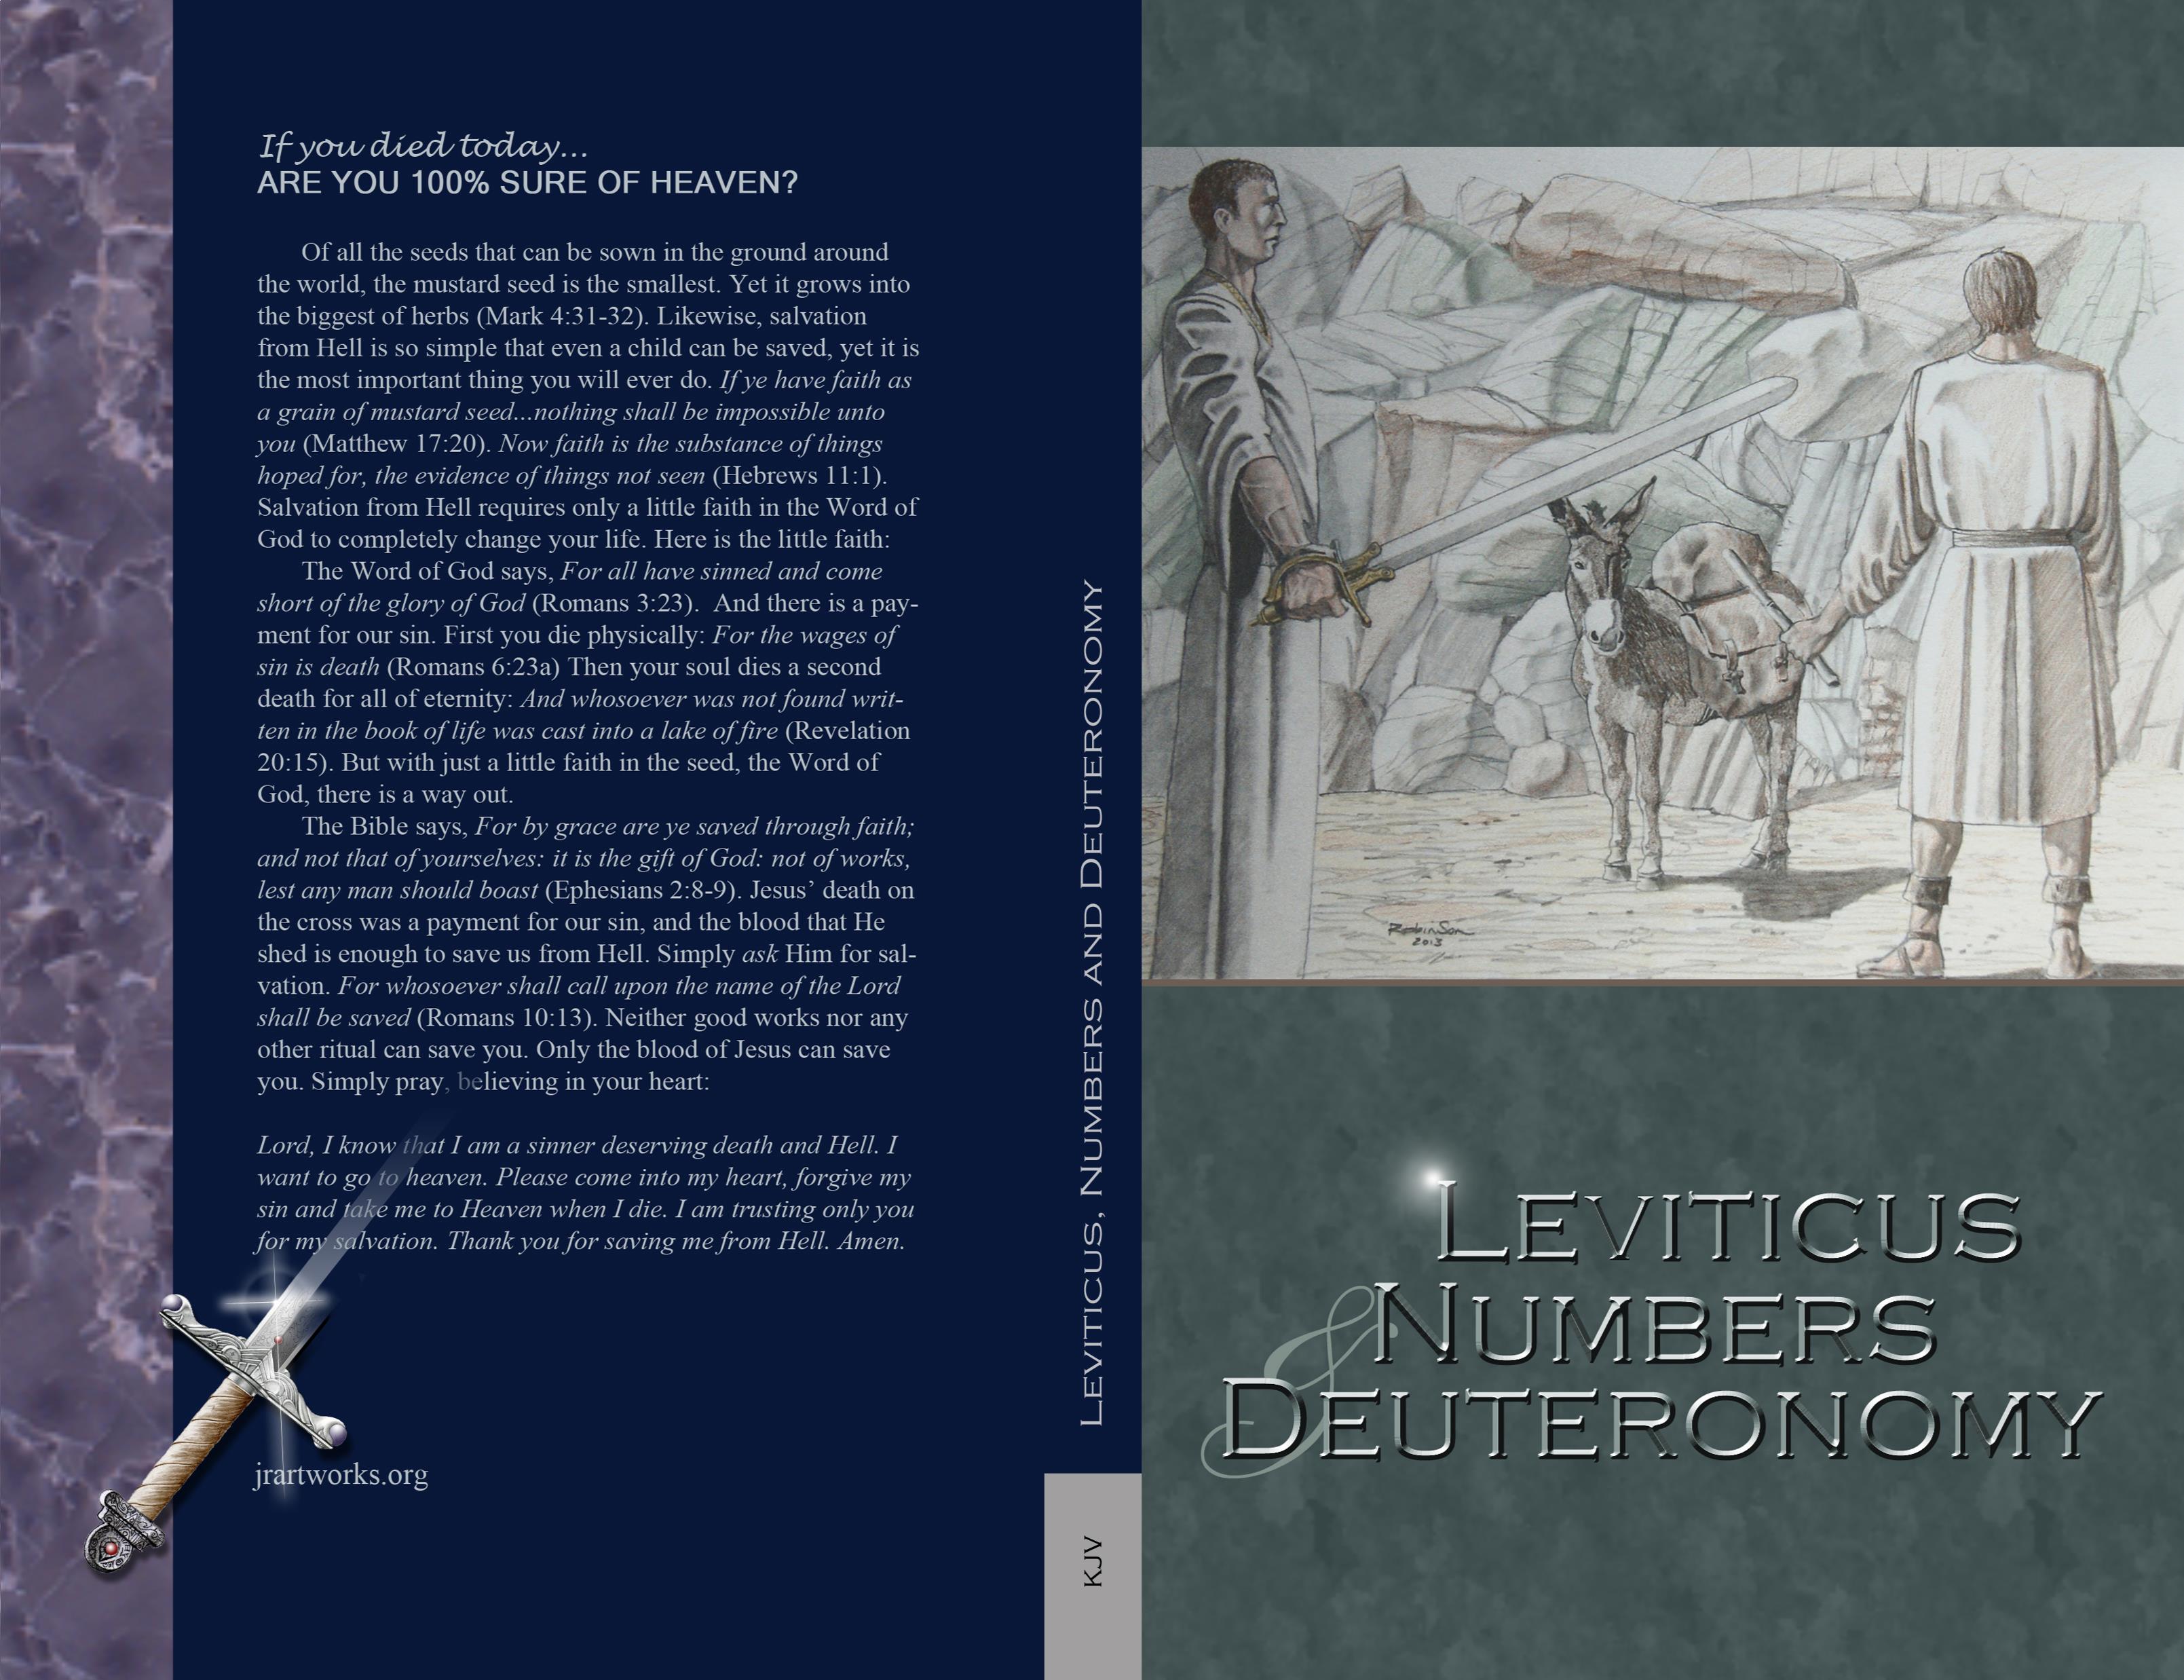 Leviticus, Numbers & Deuteronomy - KJV cover image